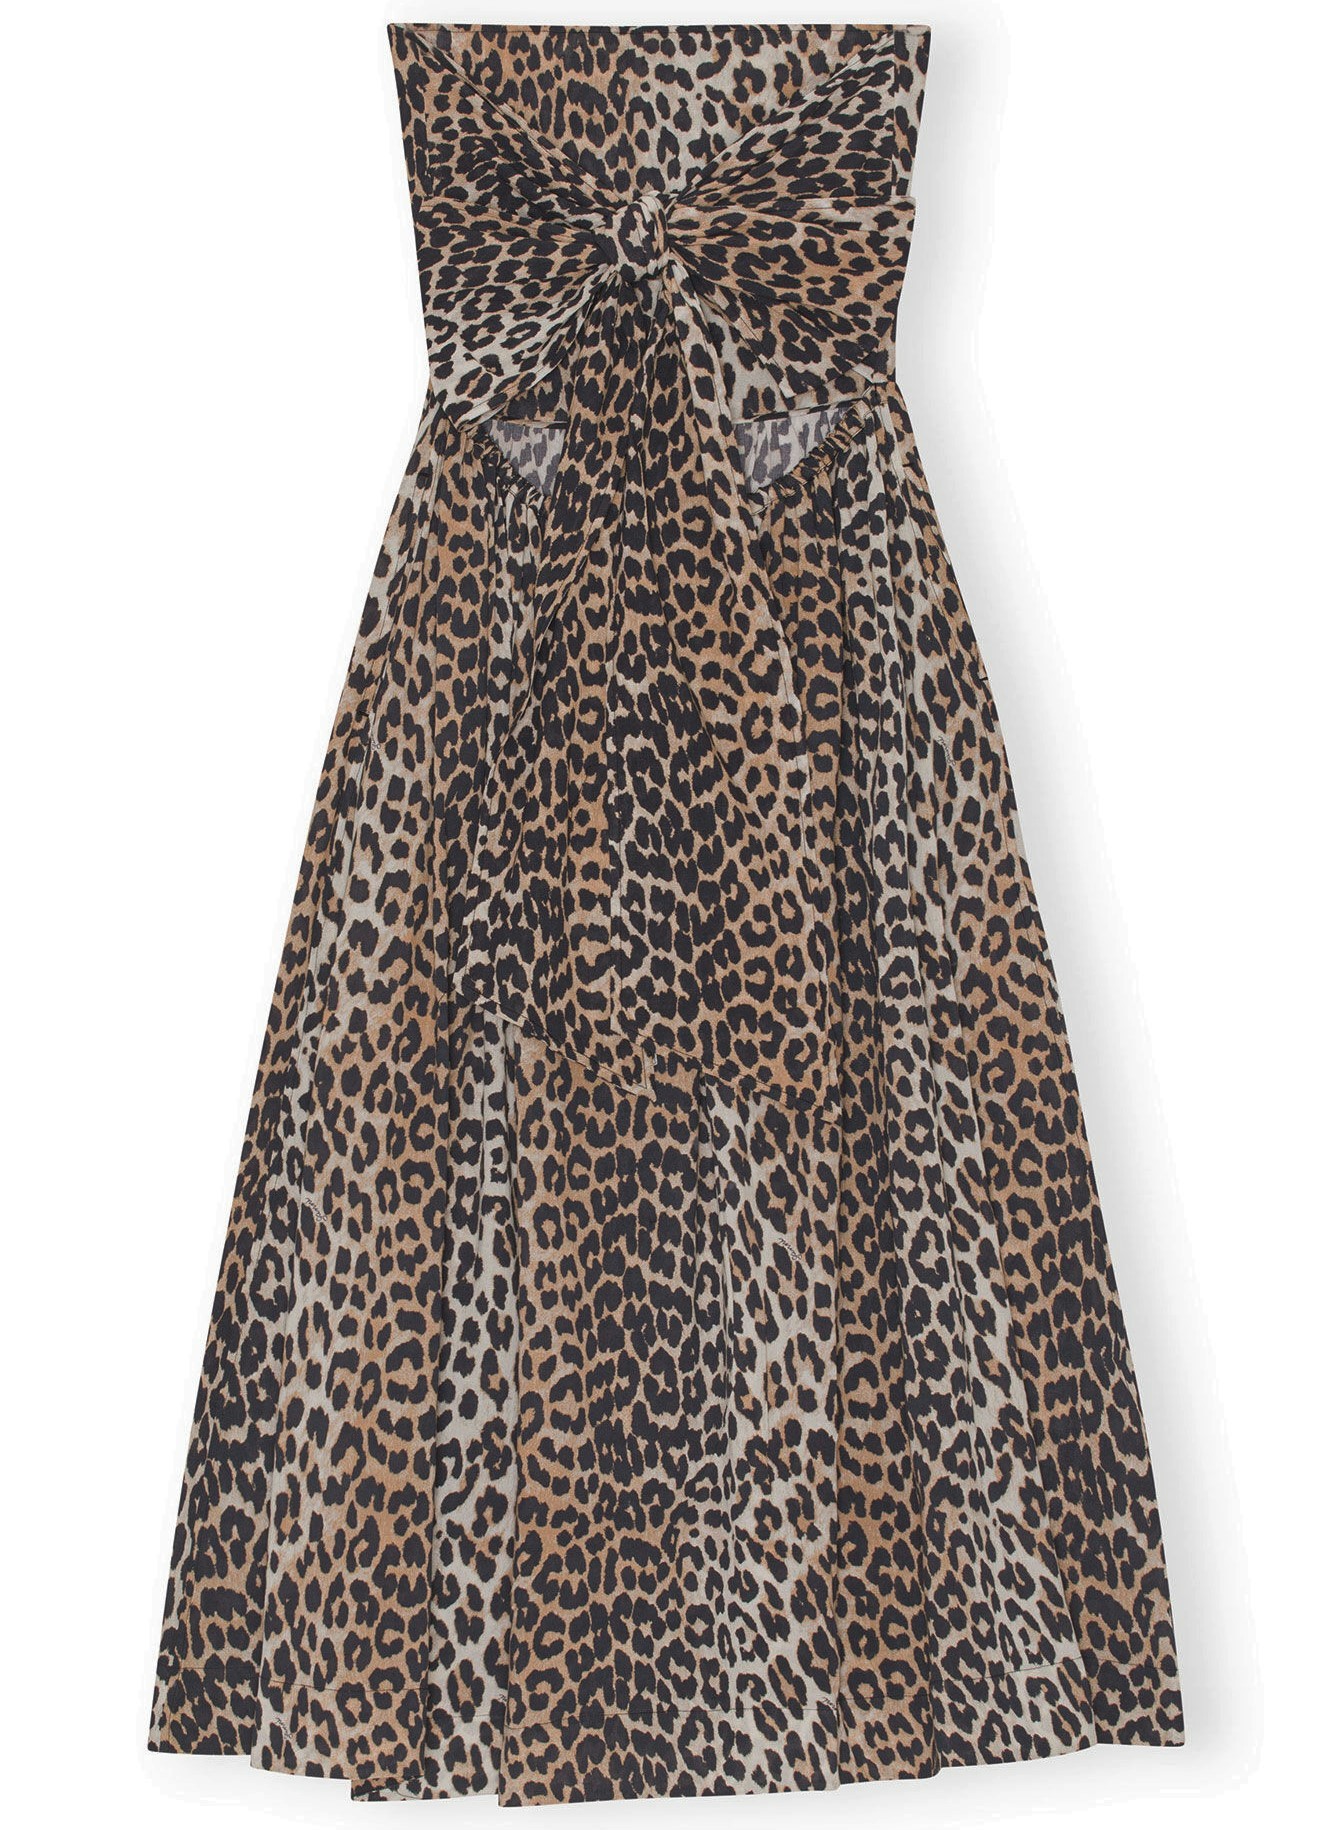 GANNI Light Cotton Tieband Multifunctional Dress in Leopard